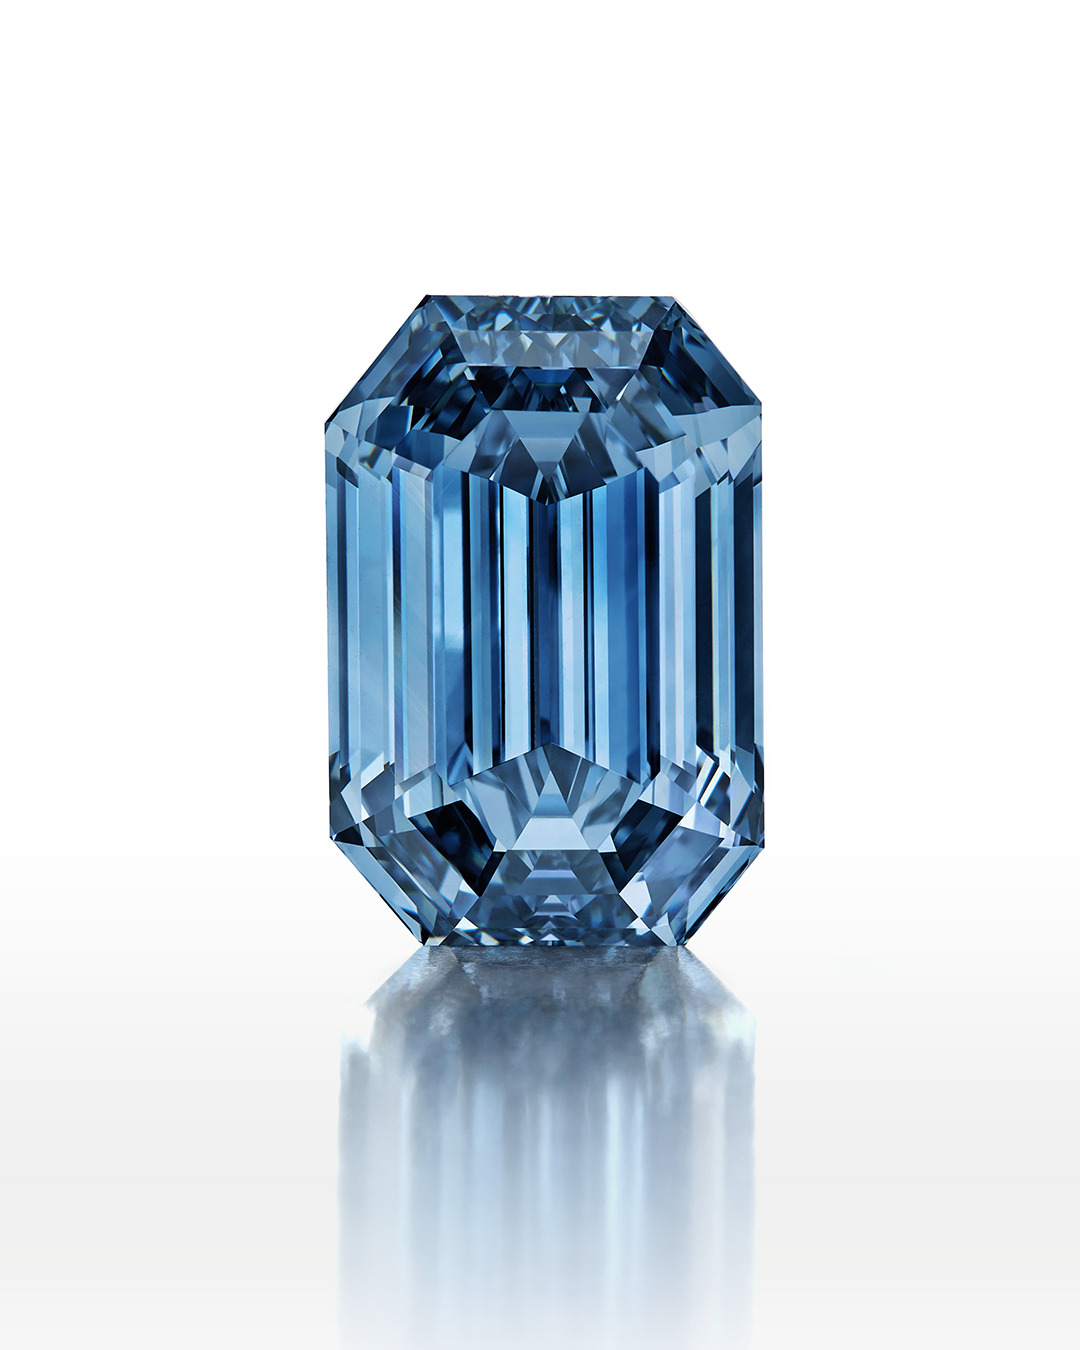 De Beers Cullinan Blue Diamond sothebys auction